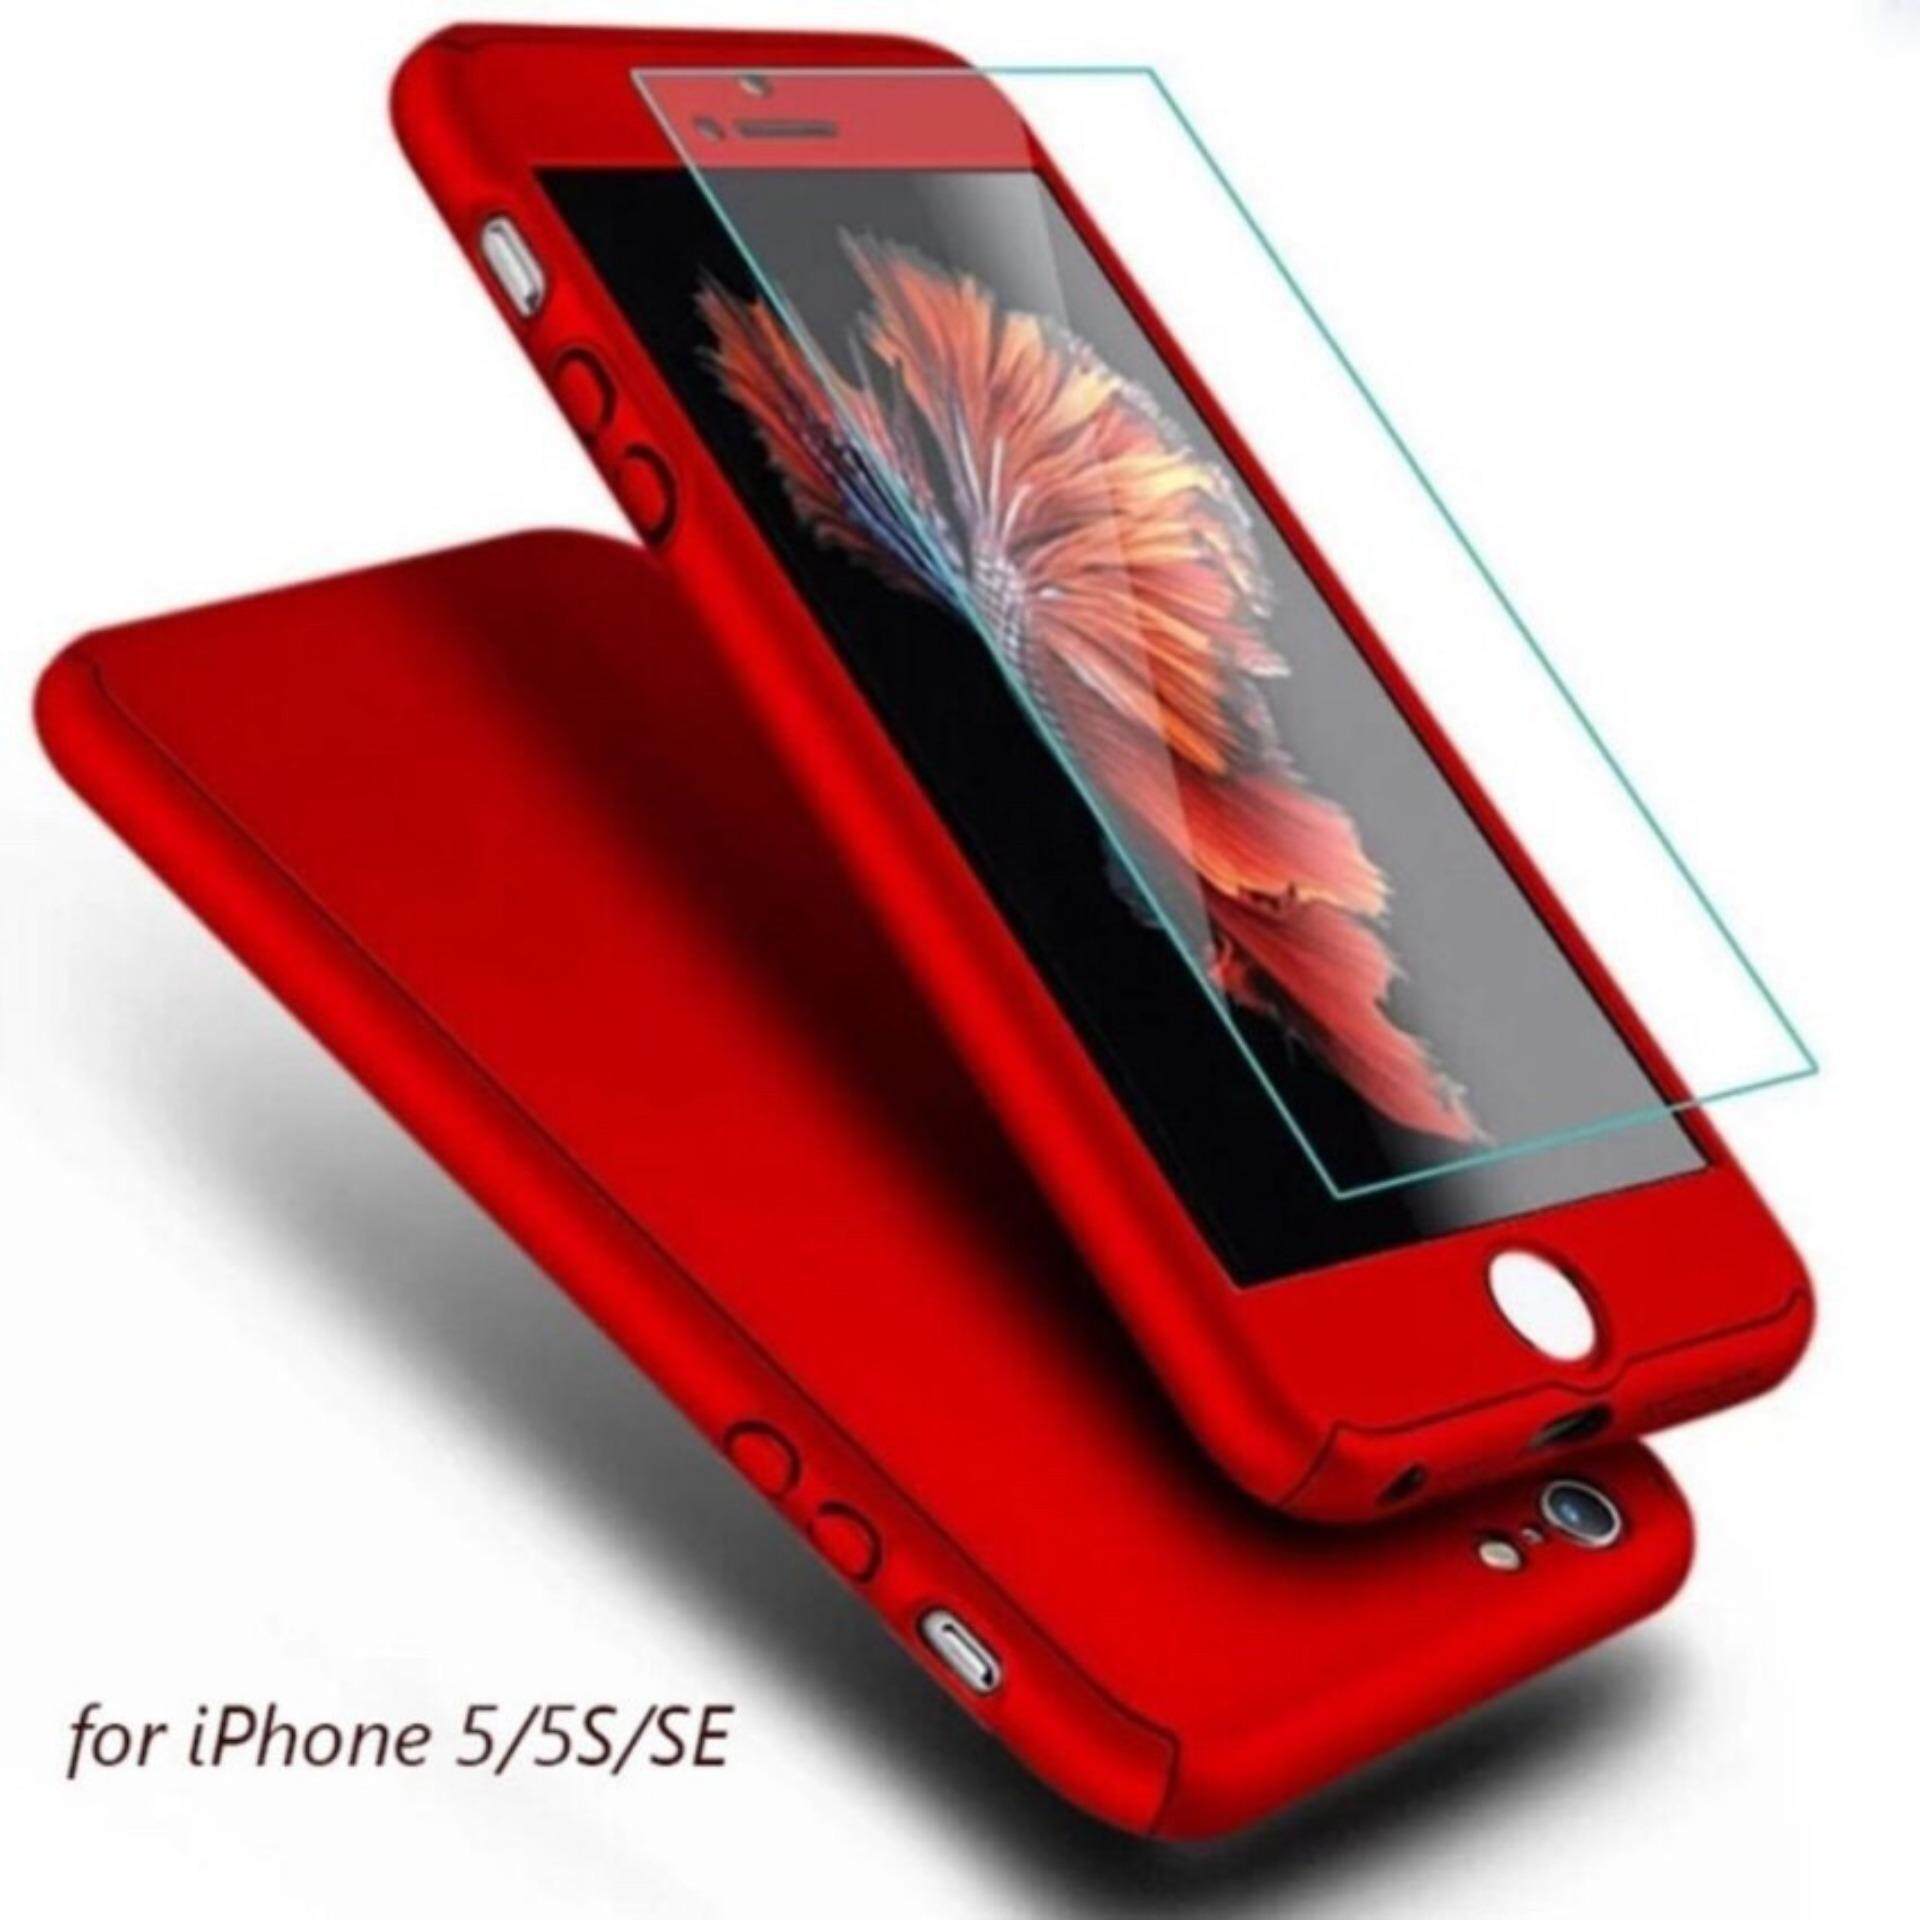 Case Iphone 5 / 5s / SE ไอโฟน 5 / 5เอส / เอสอี เคสประกบ 360 องศา สวยและบางมาก Iphone 5 / 5s / SE Case 360 เคสประกบ สินค้าใหม่